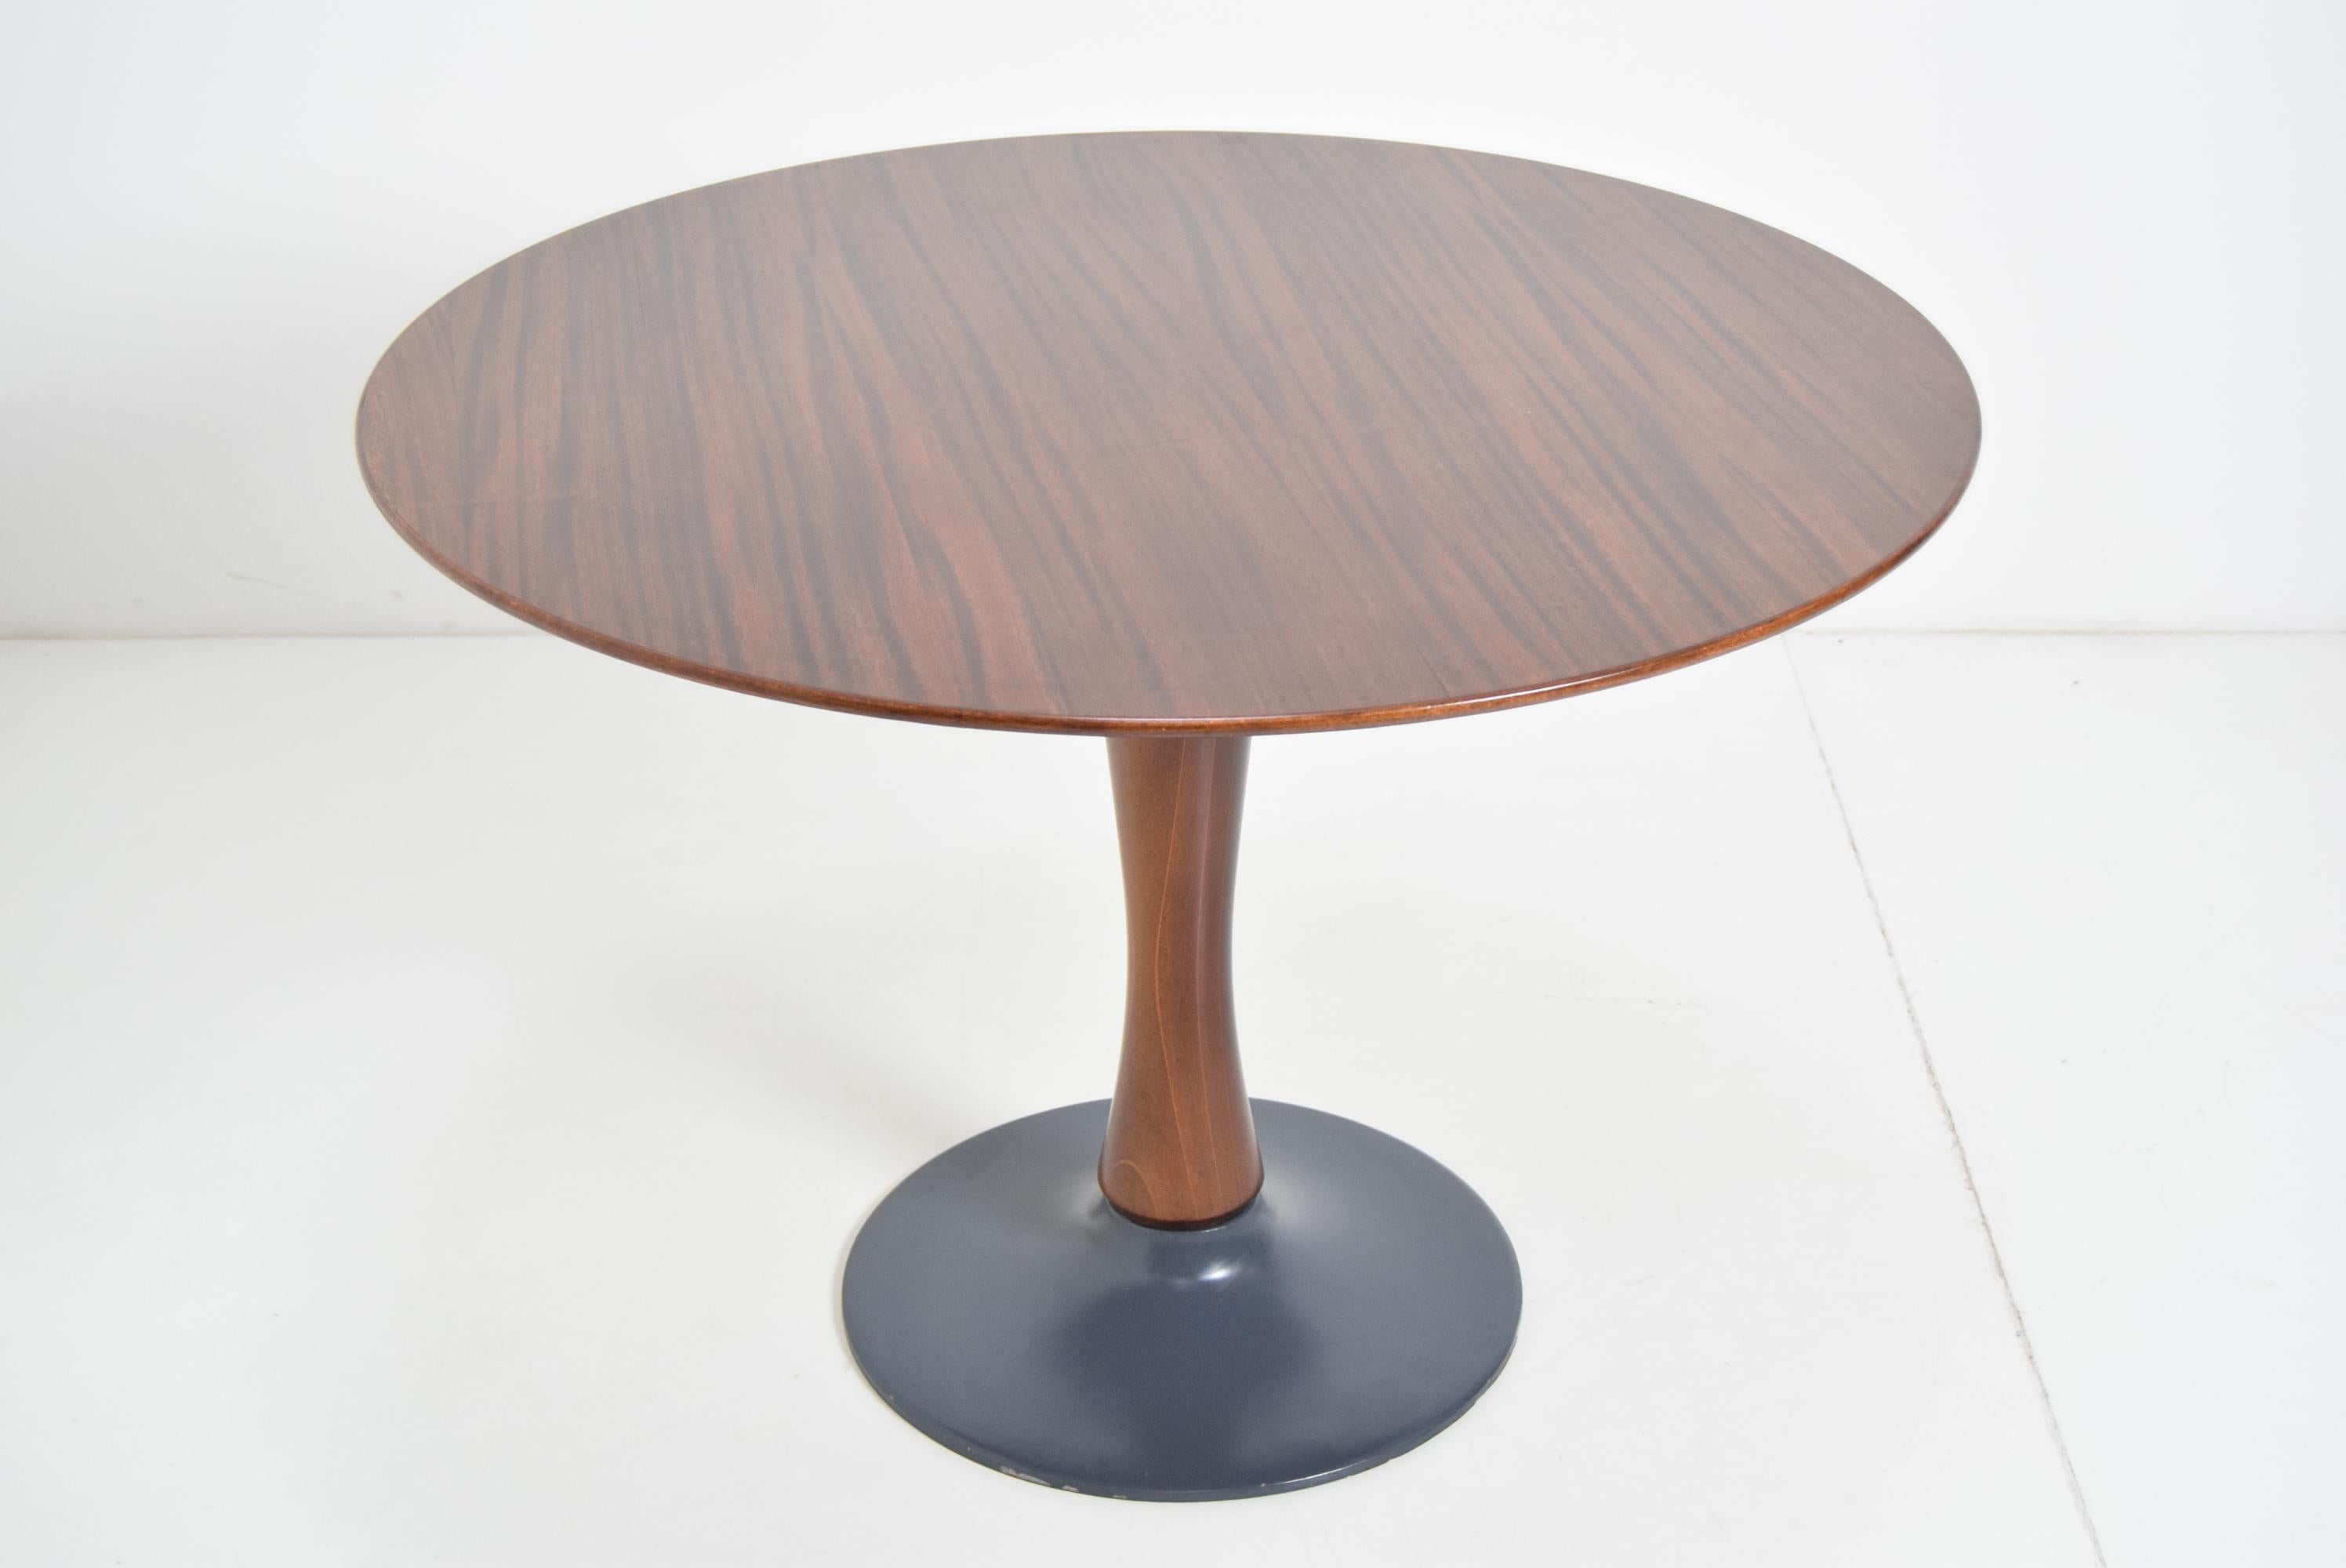 Made in Czechoslovakia
Made of beech, veneer and metal
Very nice table
Original condition.